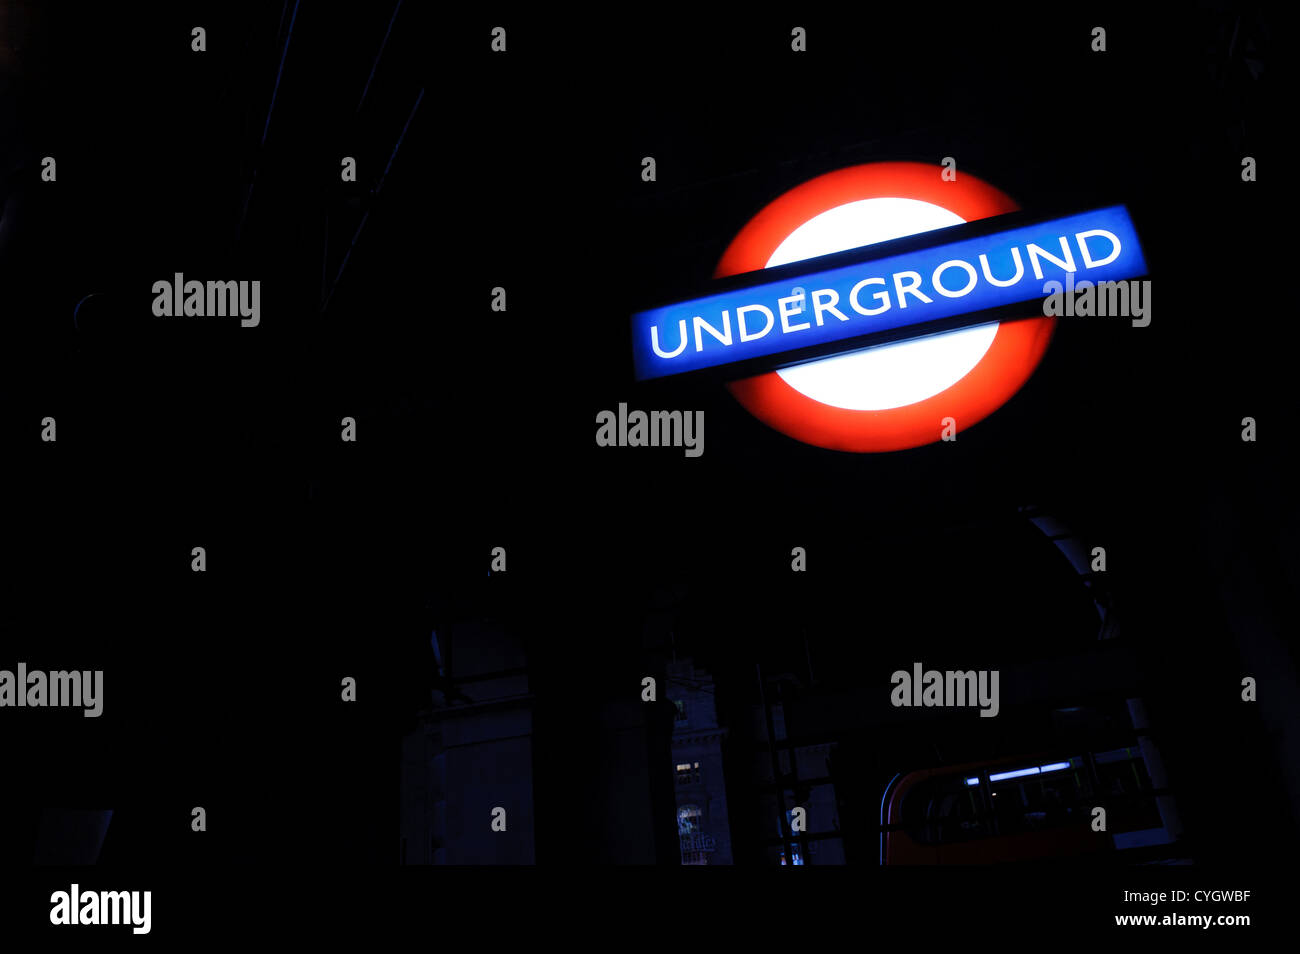 London underground sign at night Stock Photo